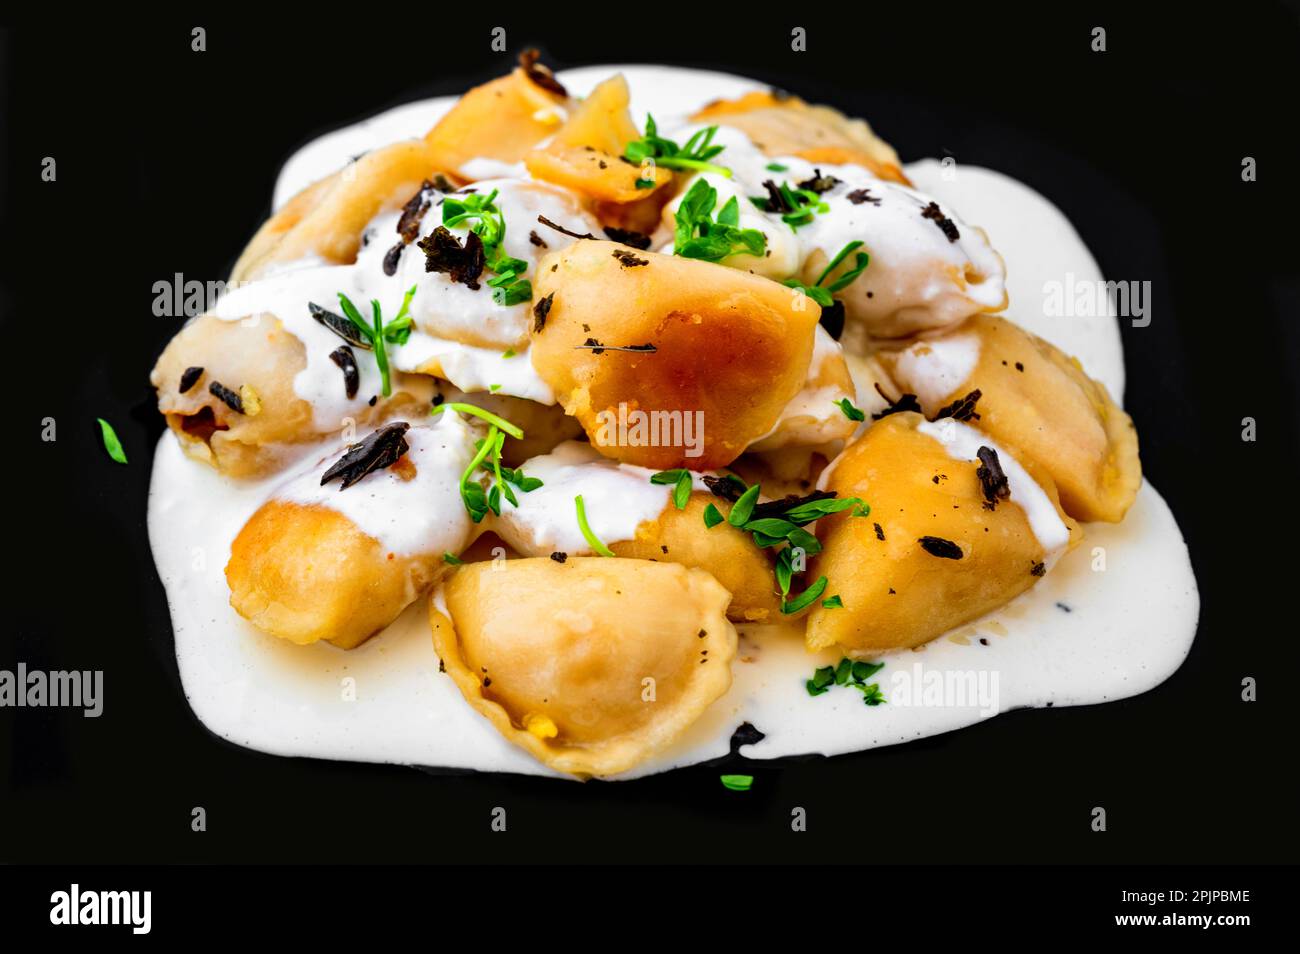 Roasted stuffed dumpling with creamy sauce, pea shoot on black plate, closeup. Stock Photo